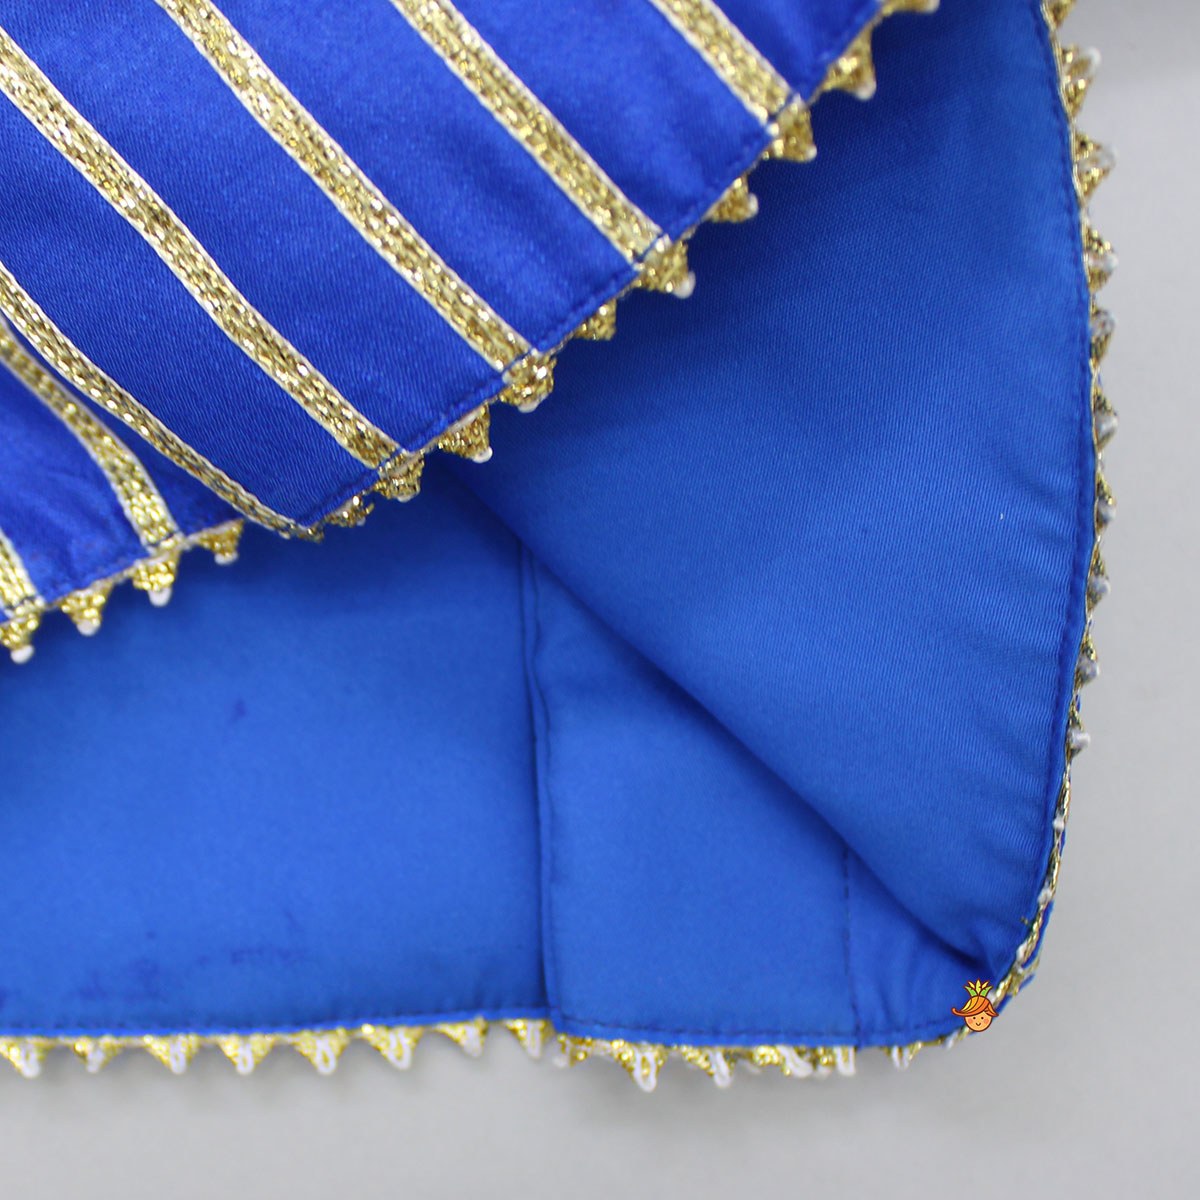 Gota Lace Detail Blue Top And Lehenga With Net Dupatta